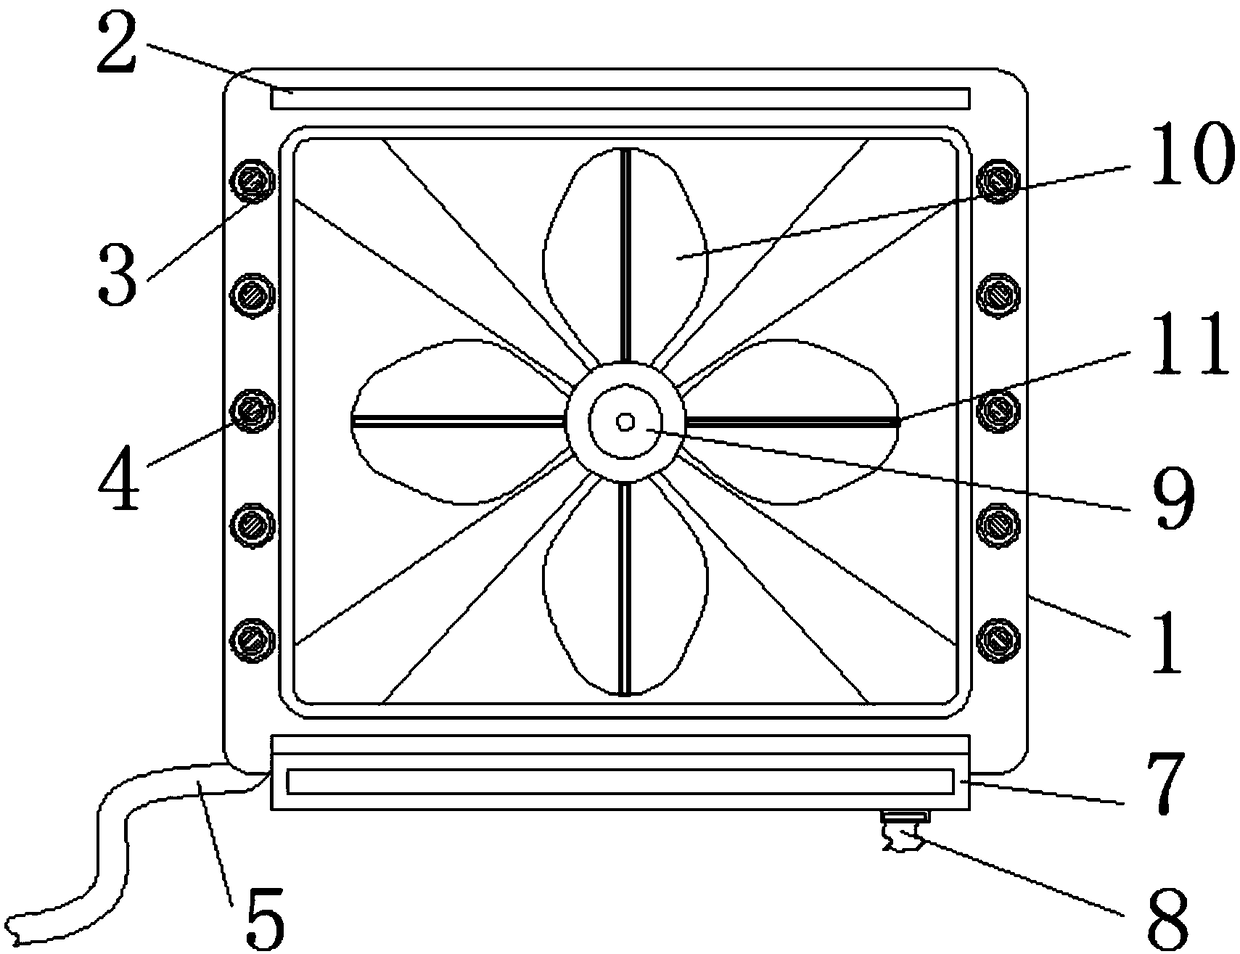 Multifunctional exhaust fan for bathroom